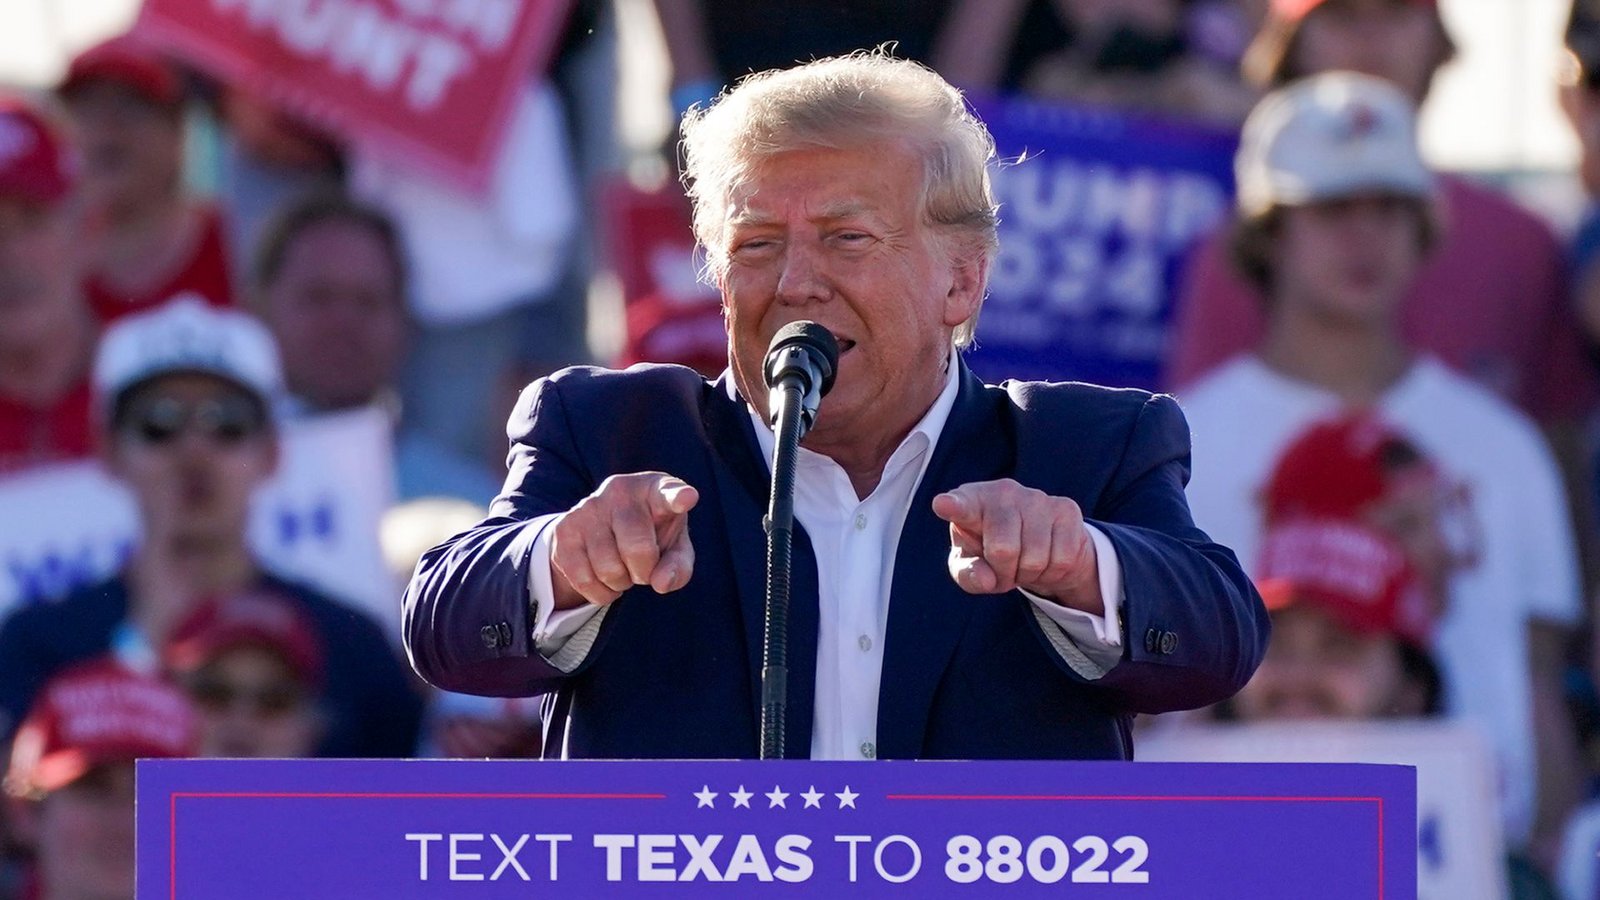 Der ehemalige US-Präsident Donald Trump macht anderen Vorwürfe.Foto: Nathan Howard/AP/dpa